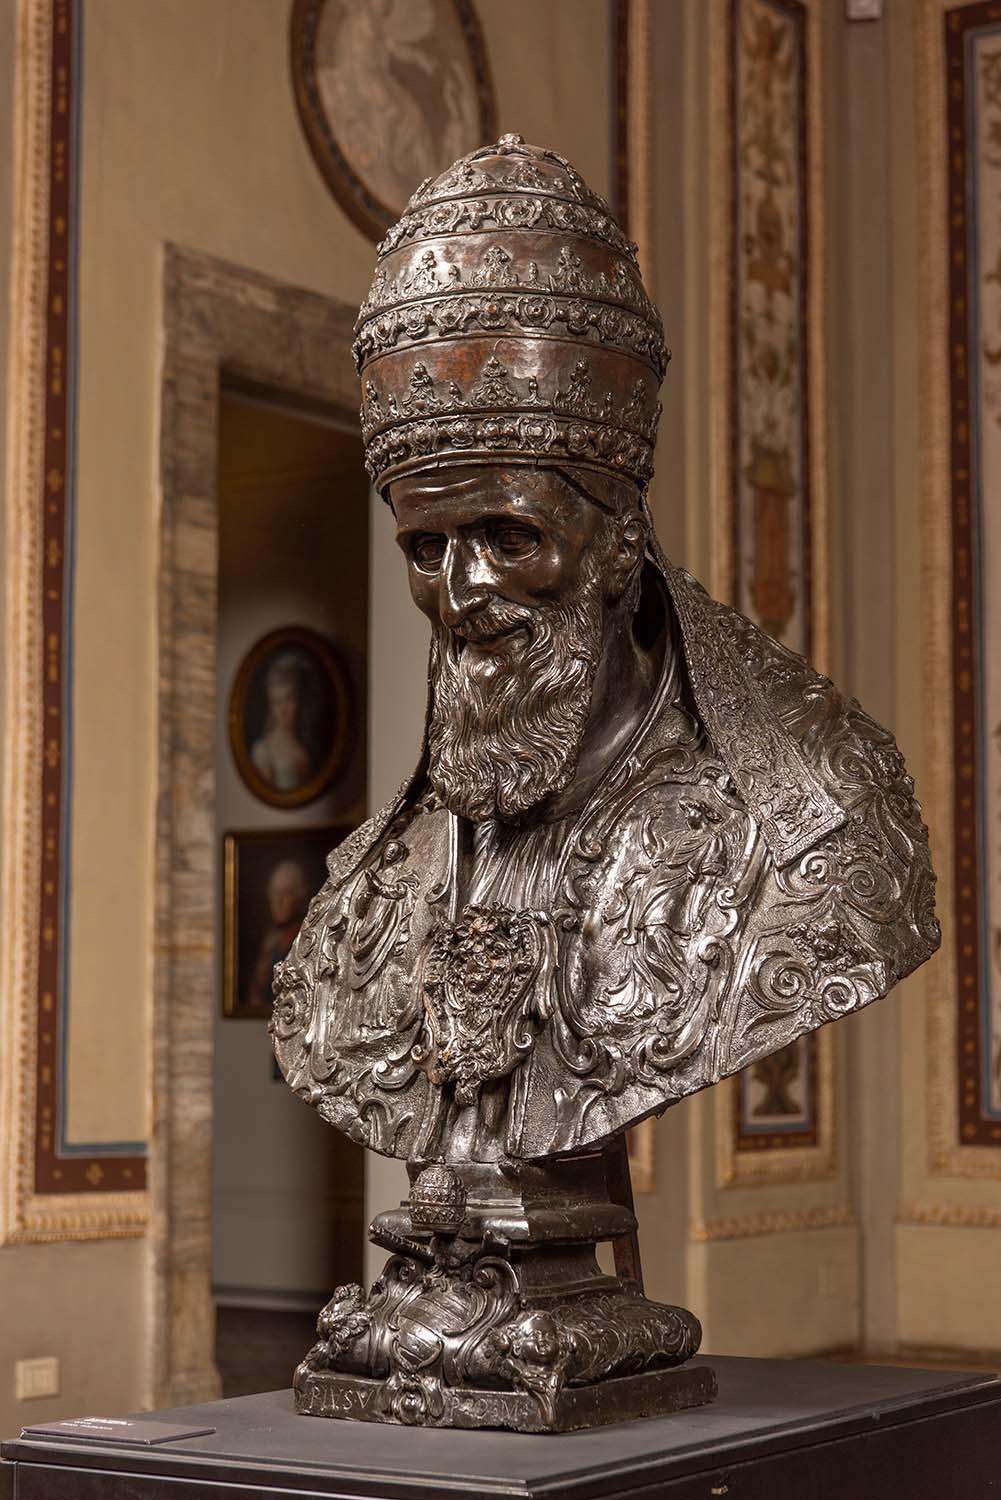 The bust of Pius V Ghislieri